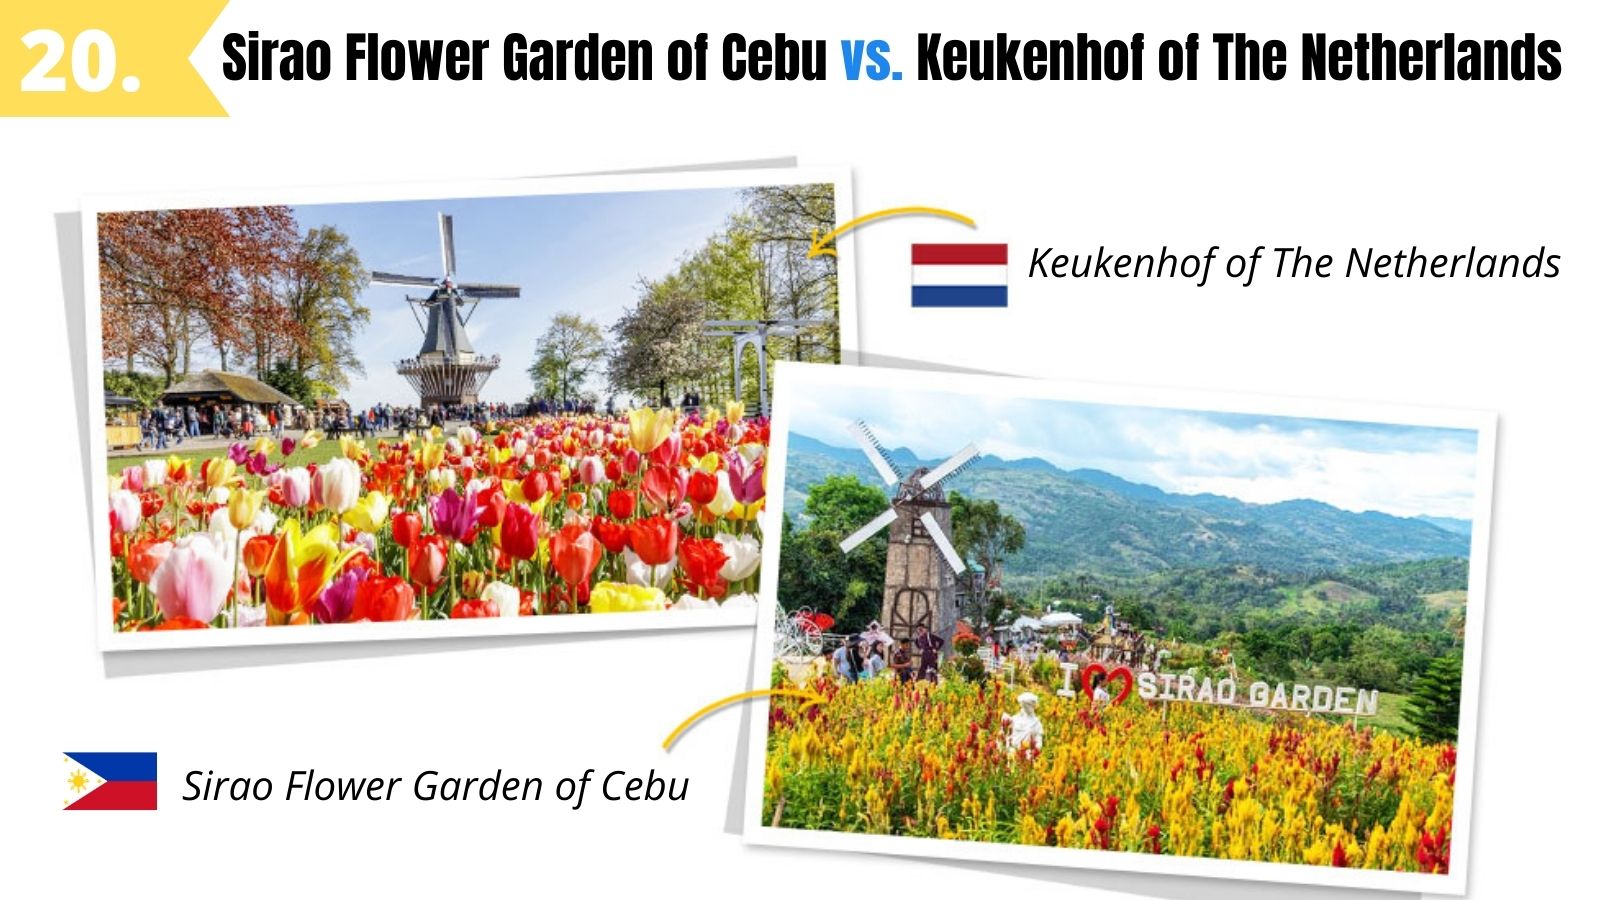 sirao flower garden mini amsterdam of cebu